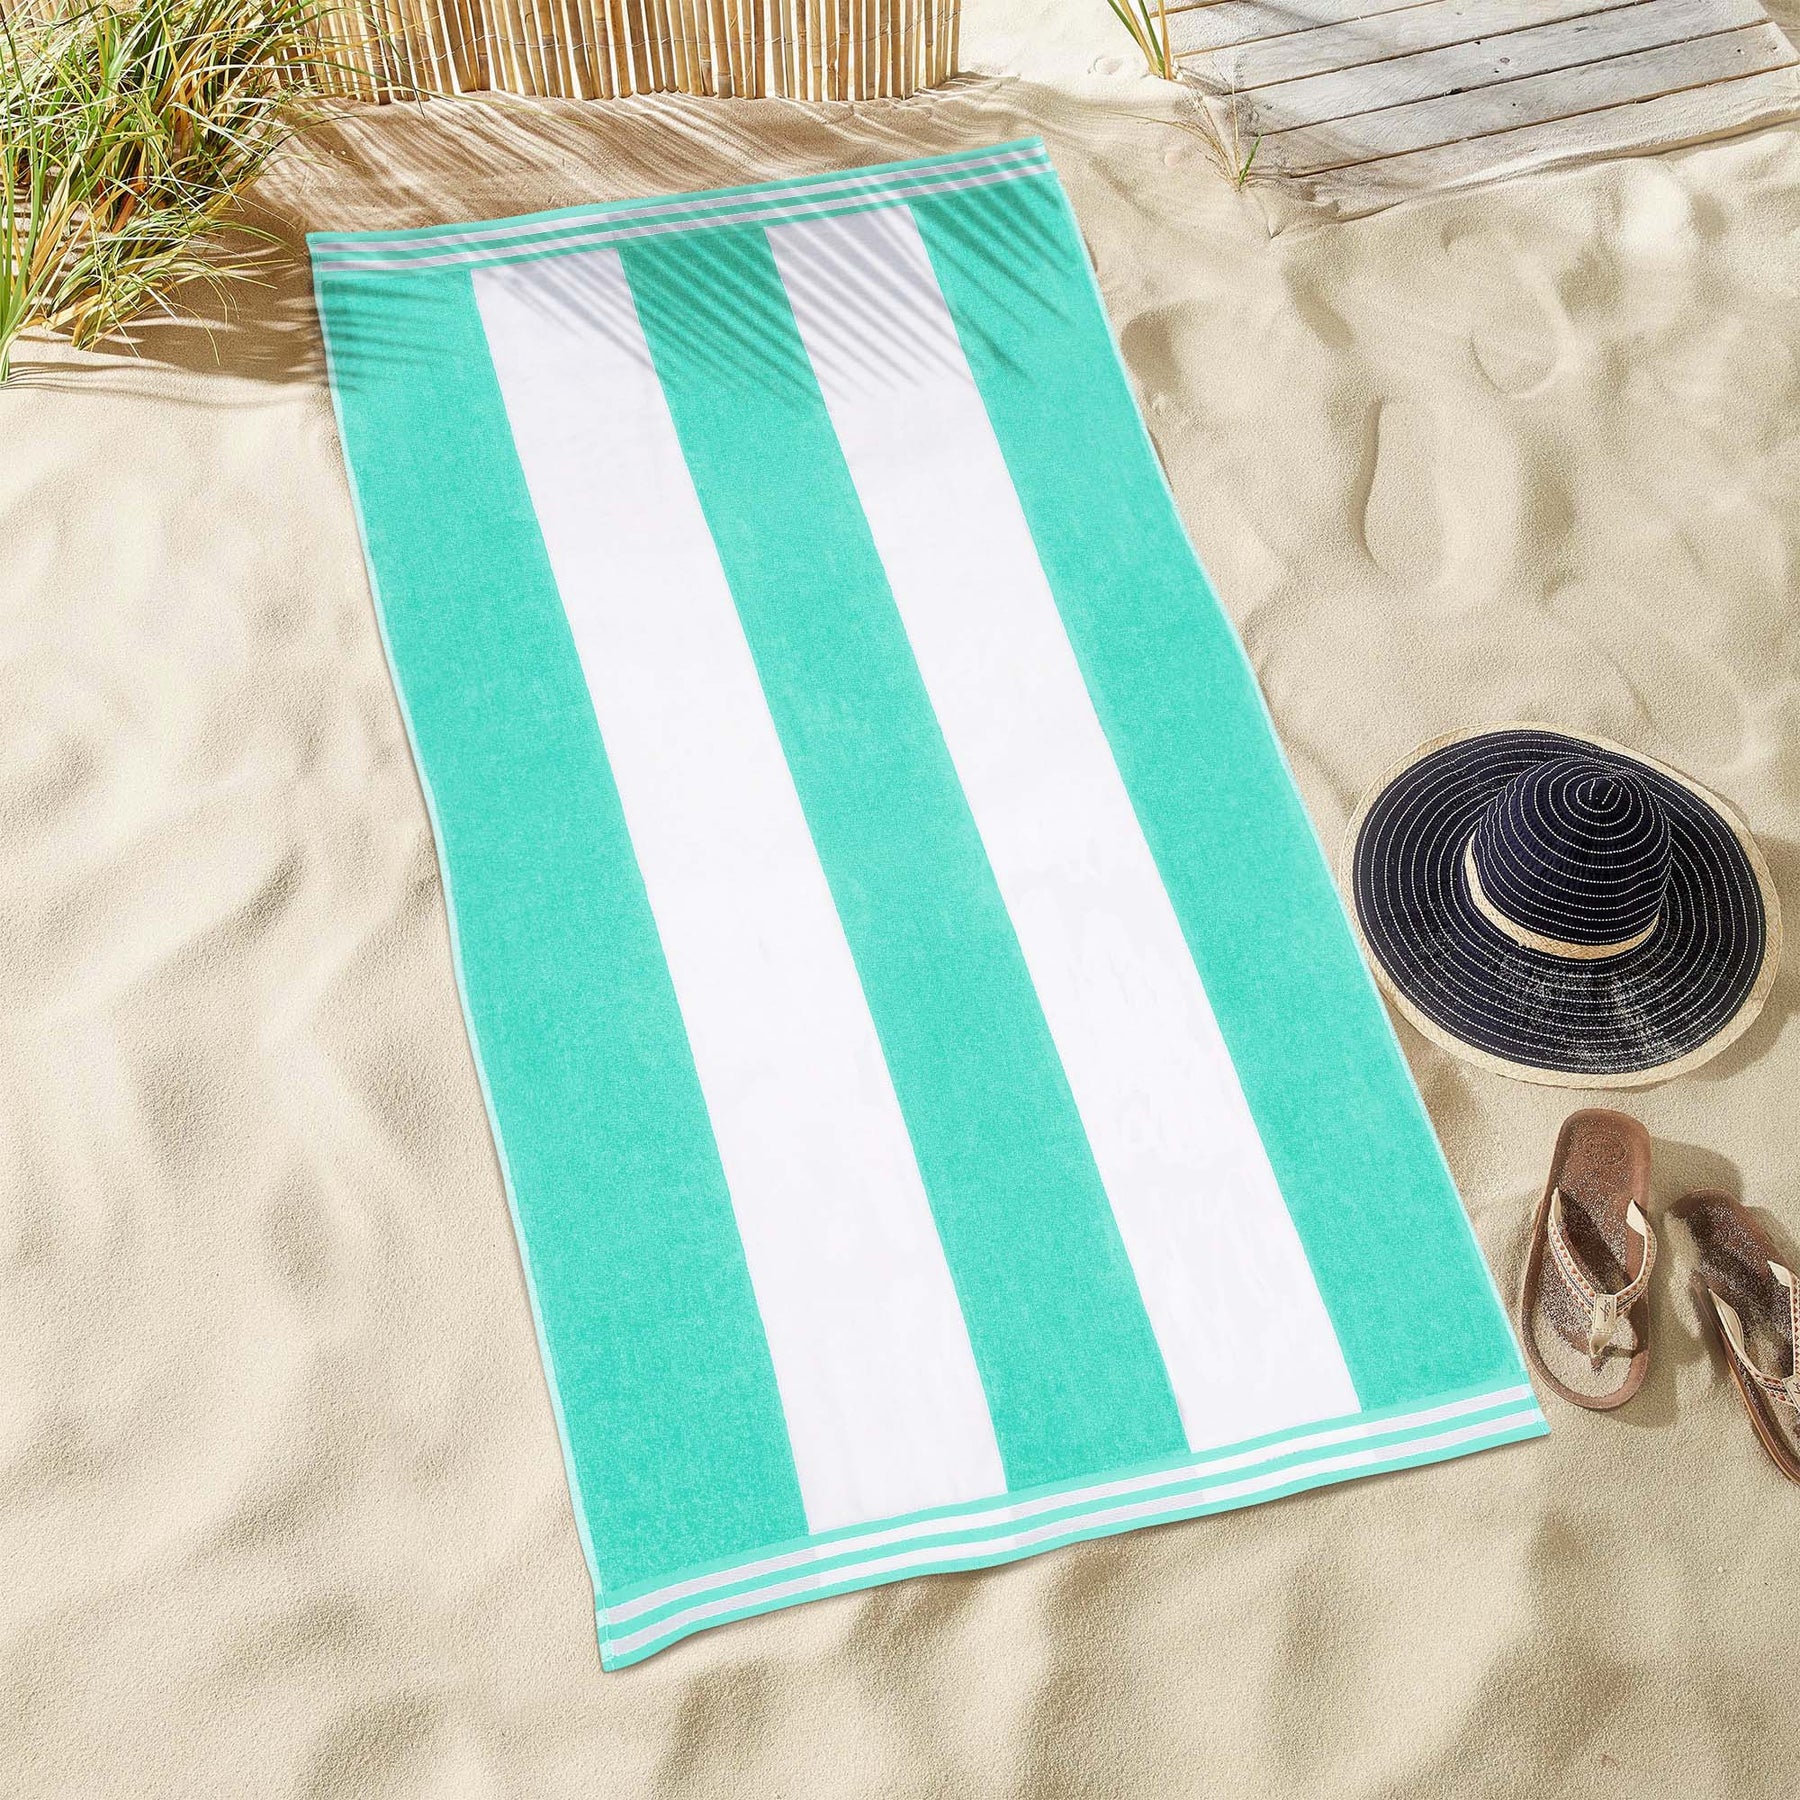 Superior Cabana Stripe Oversized Cotton Beach Towel Set Of 2,4,6 - Mint